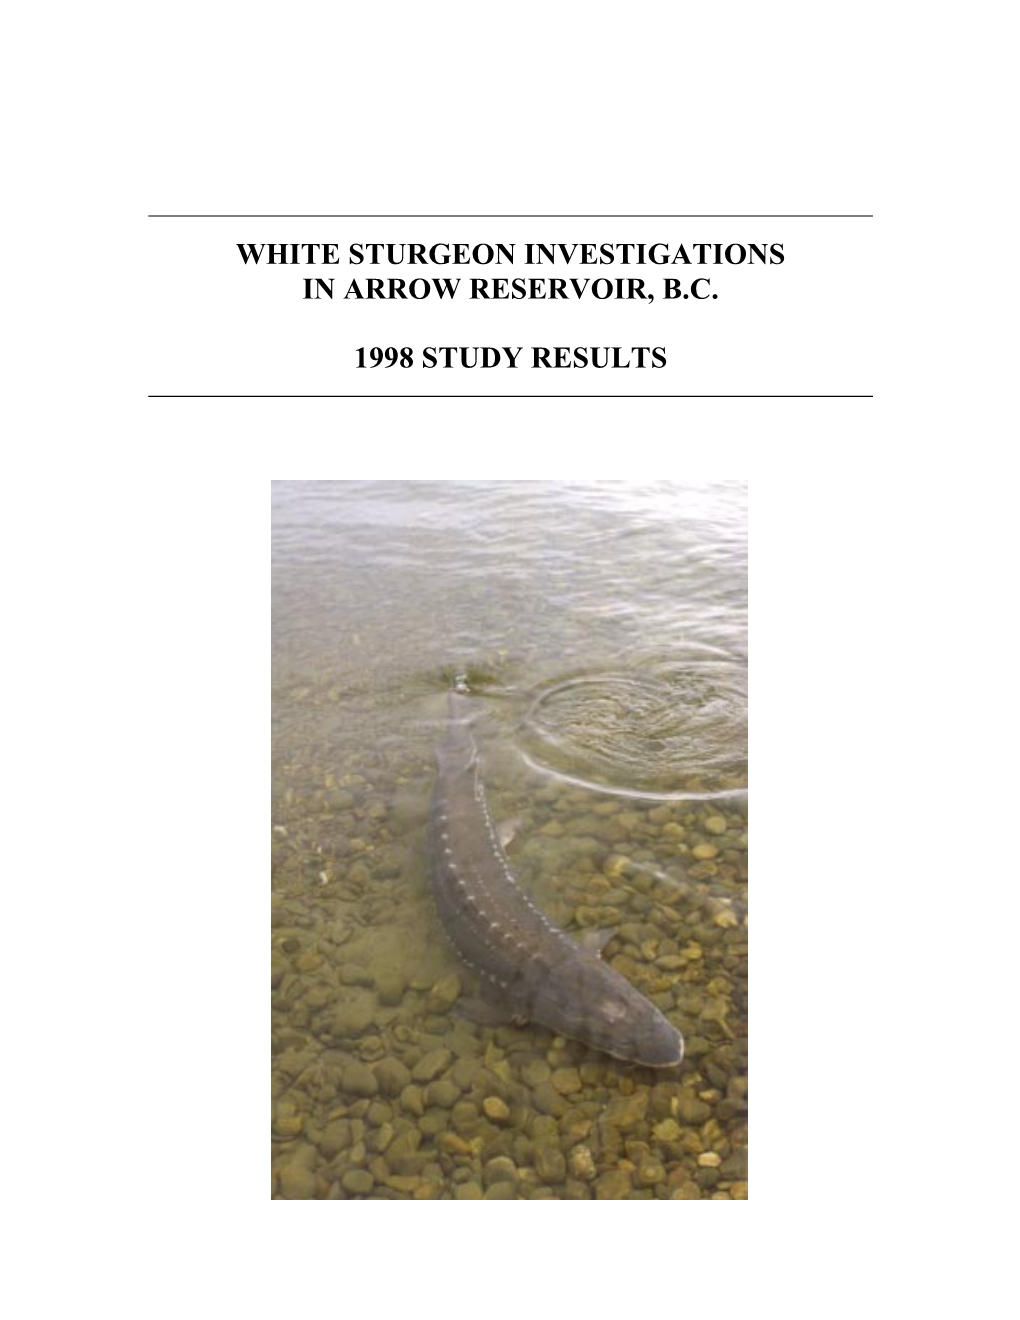 White Sturgeon Investigations in Arrow Reservoir, B.C